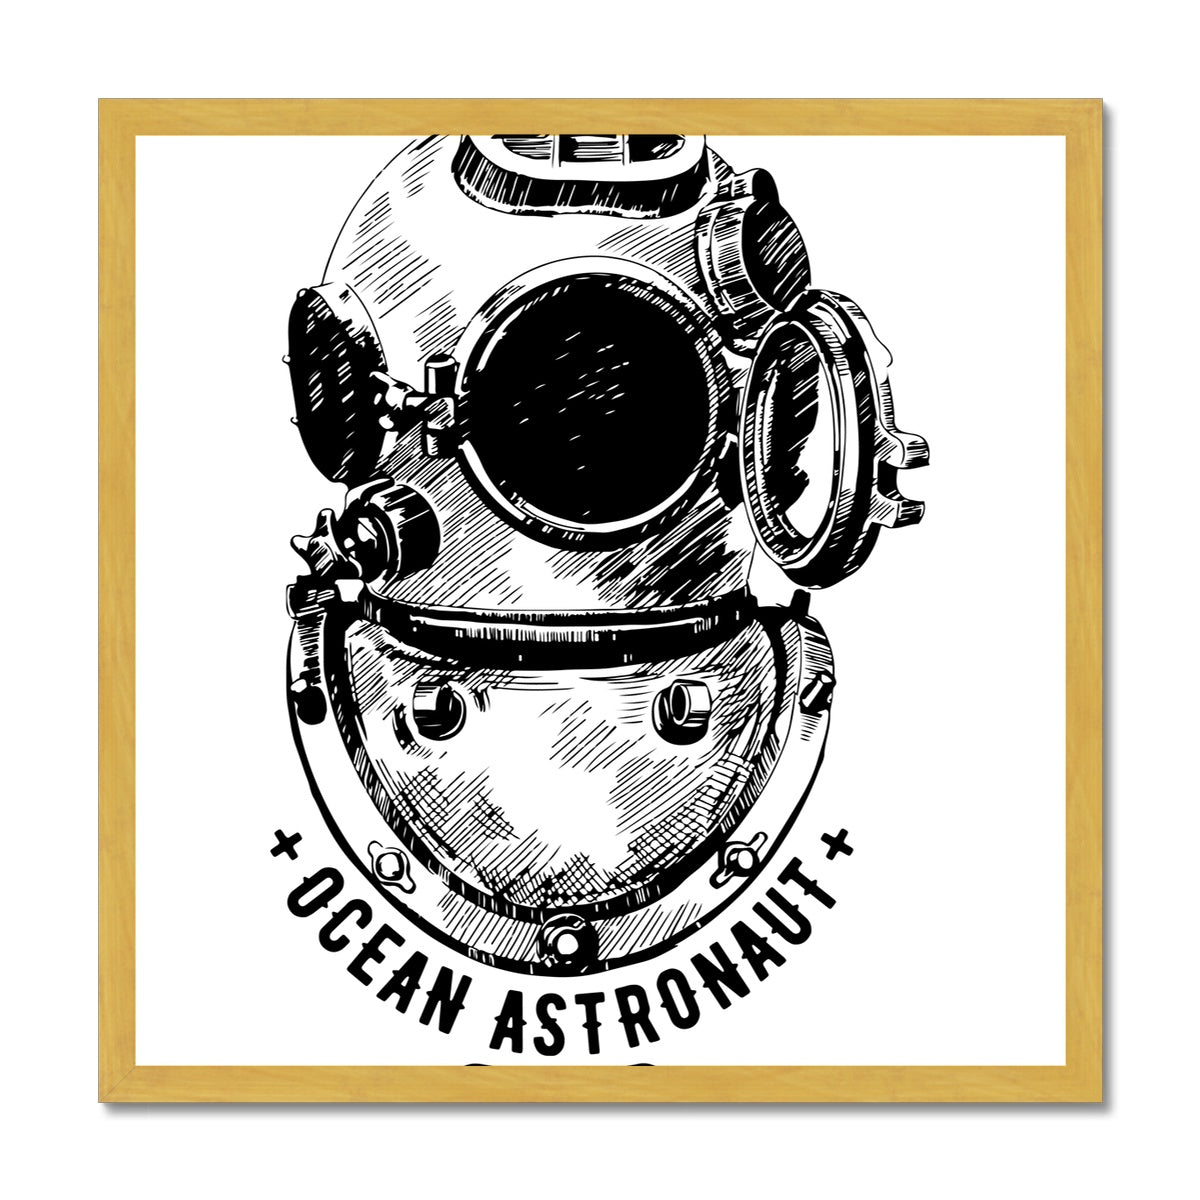 AQUA B&W - 05 - Ocean astronaut - Antique Framed Print